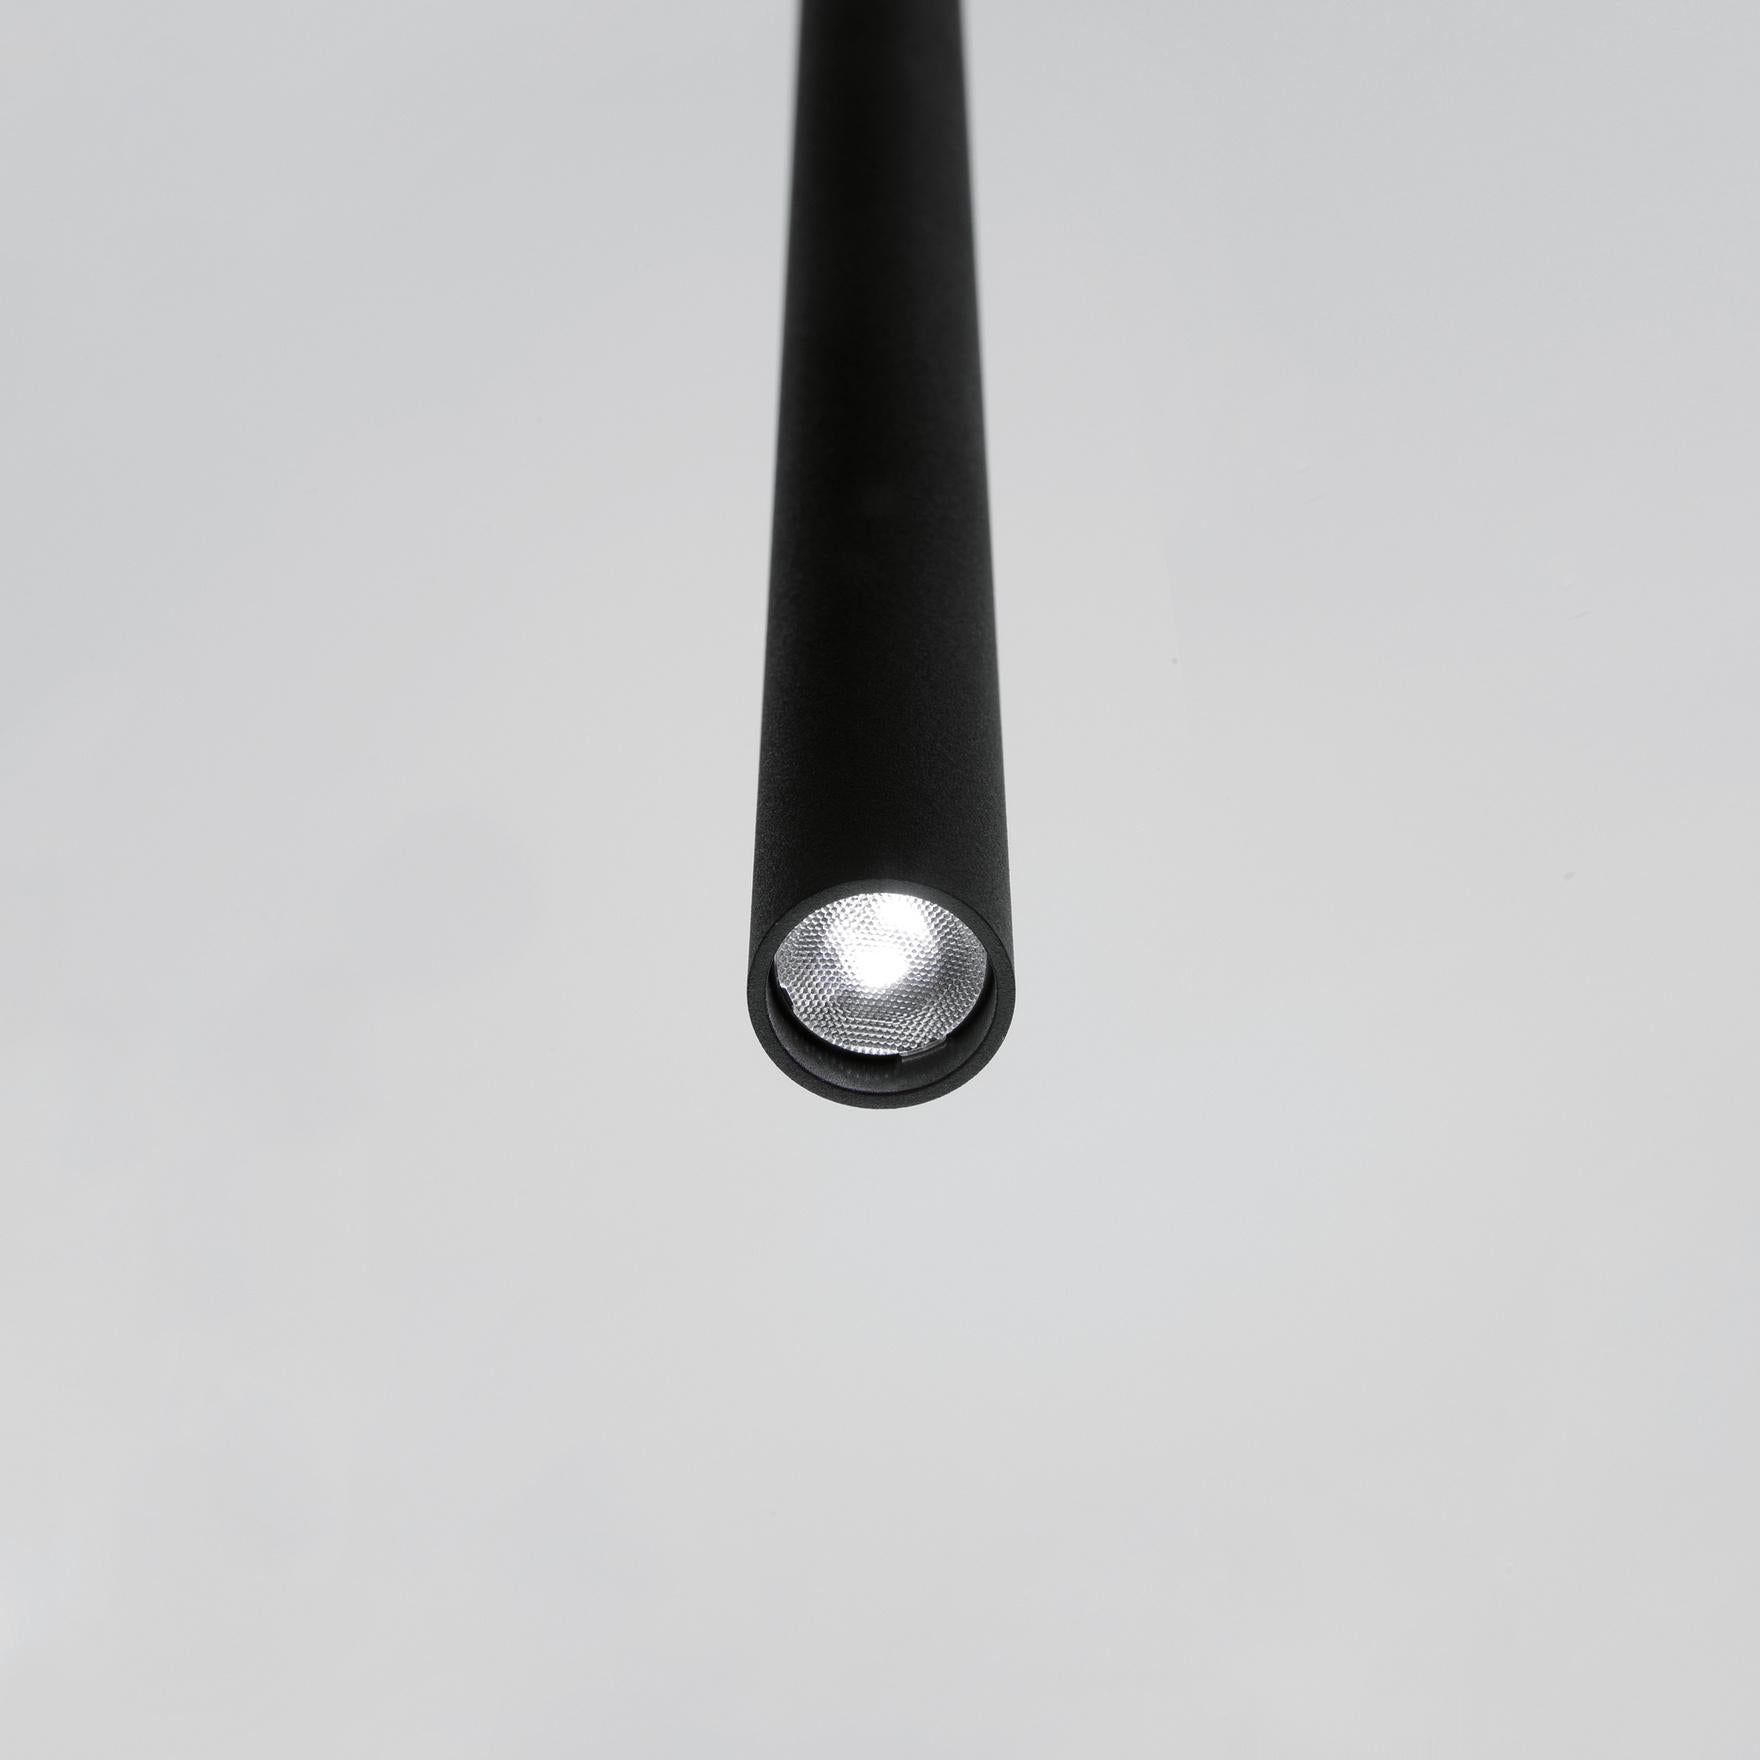 Davide Groppi MISS pendant lamp in Matt black by Omar Carraglia  For Sale 5